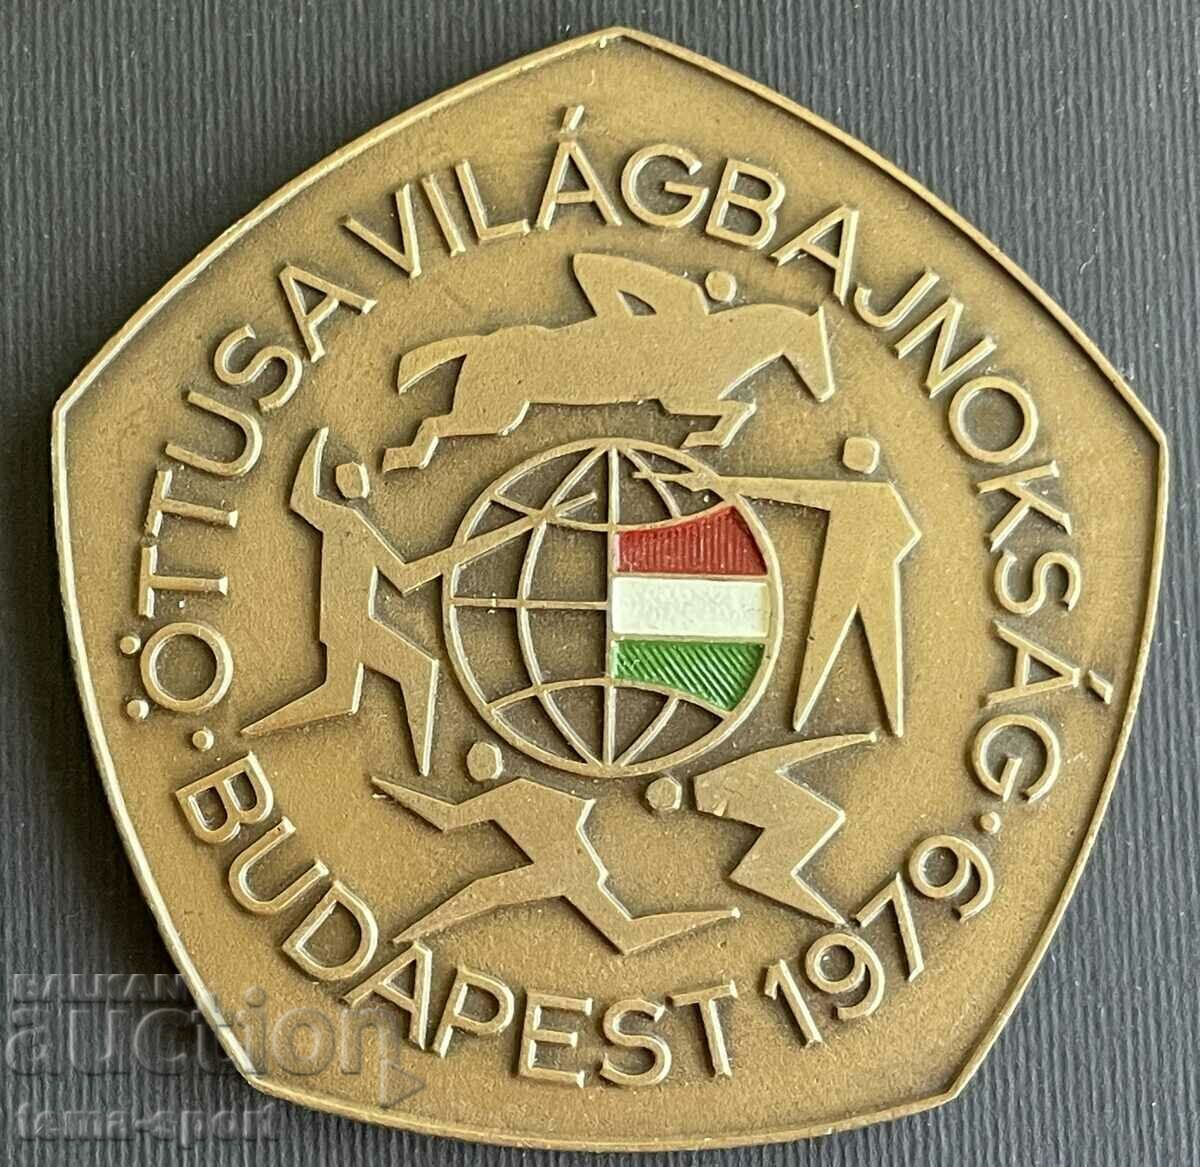 22 Hungary plaque competitions modern pentathlon 1979